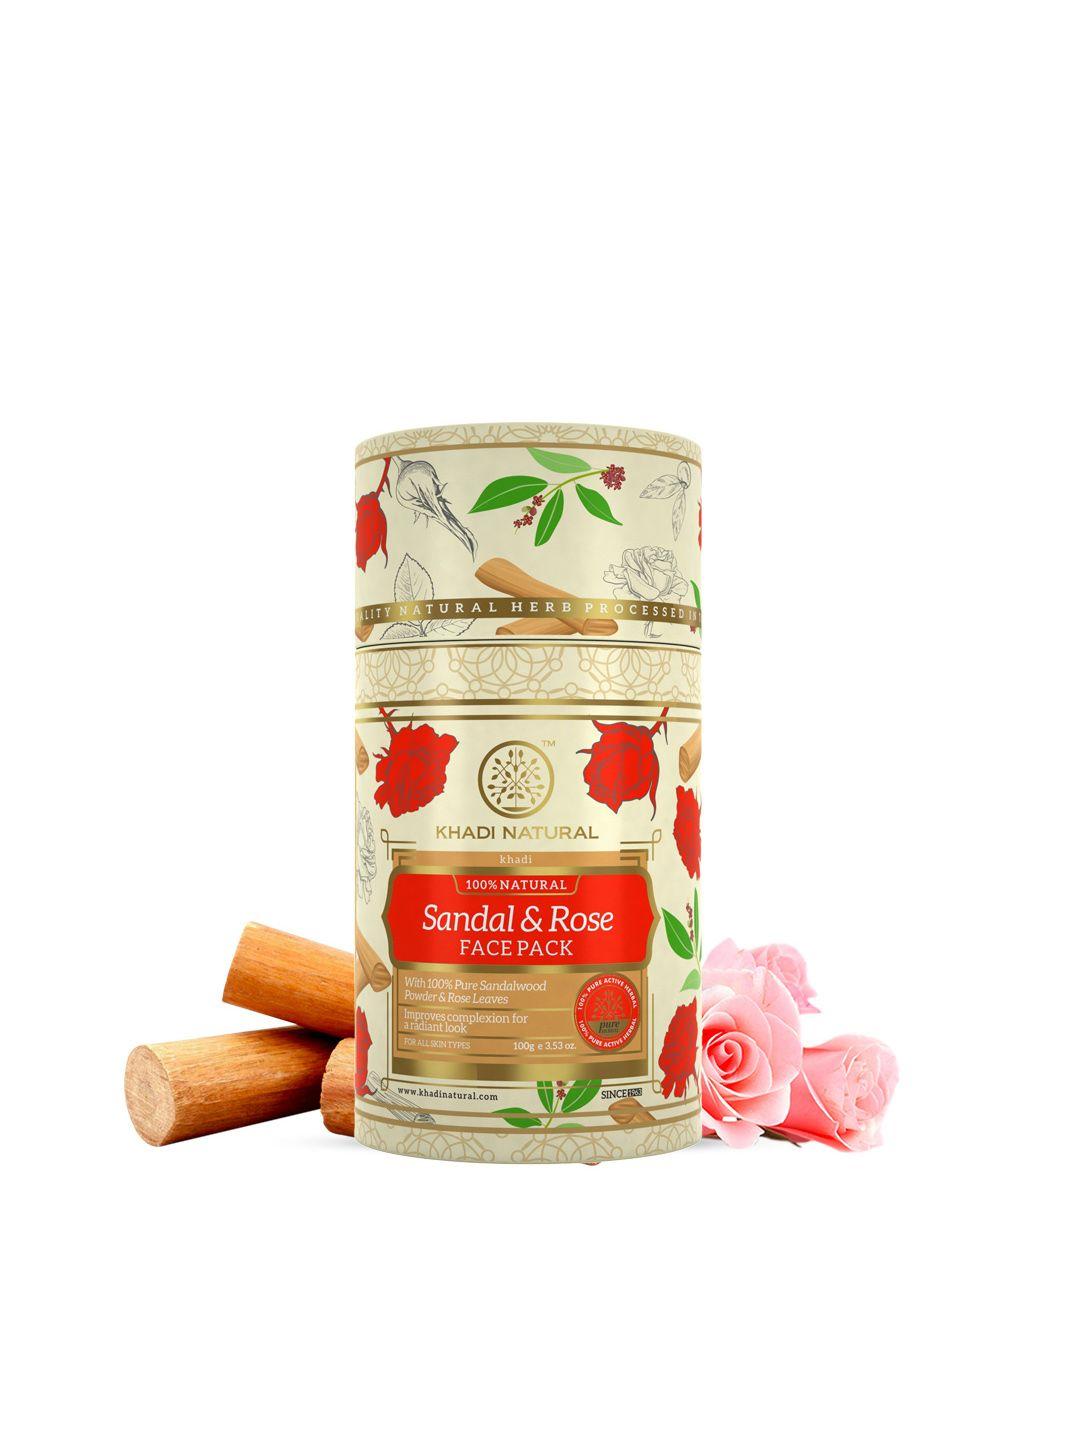 khadi natural sandalwood & rose face pack - gives smooth & supple skin - 100g